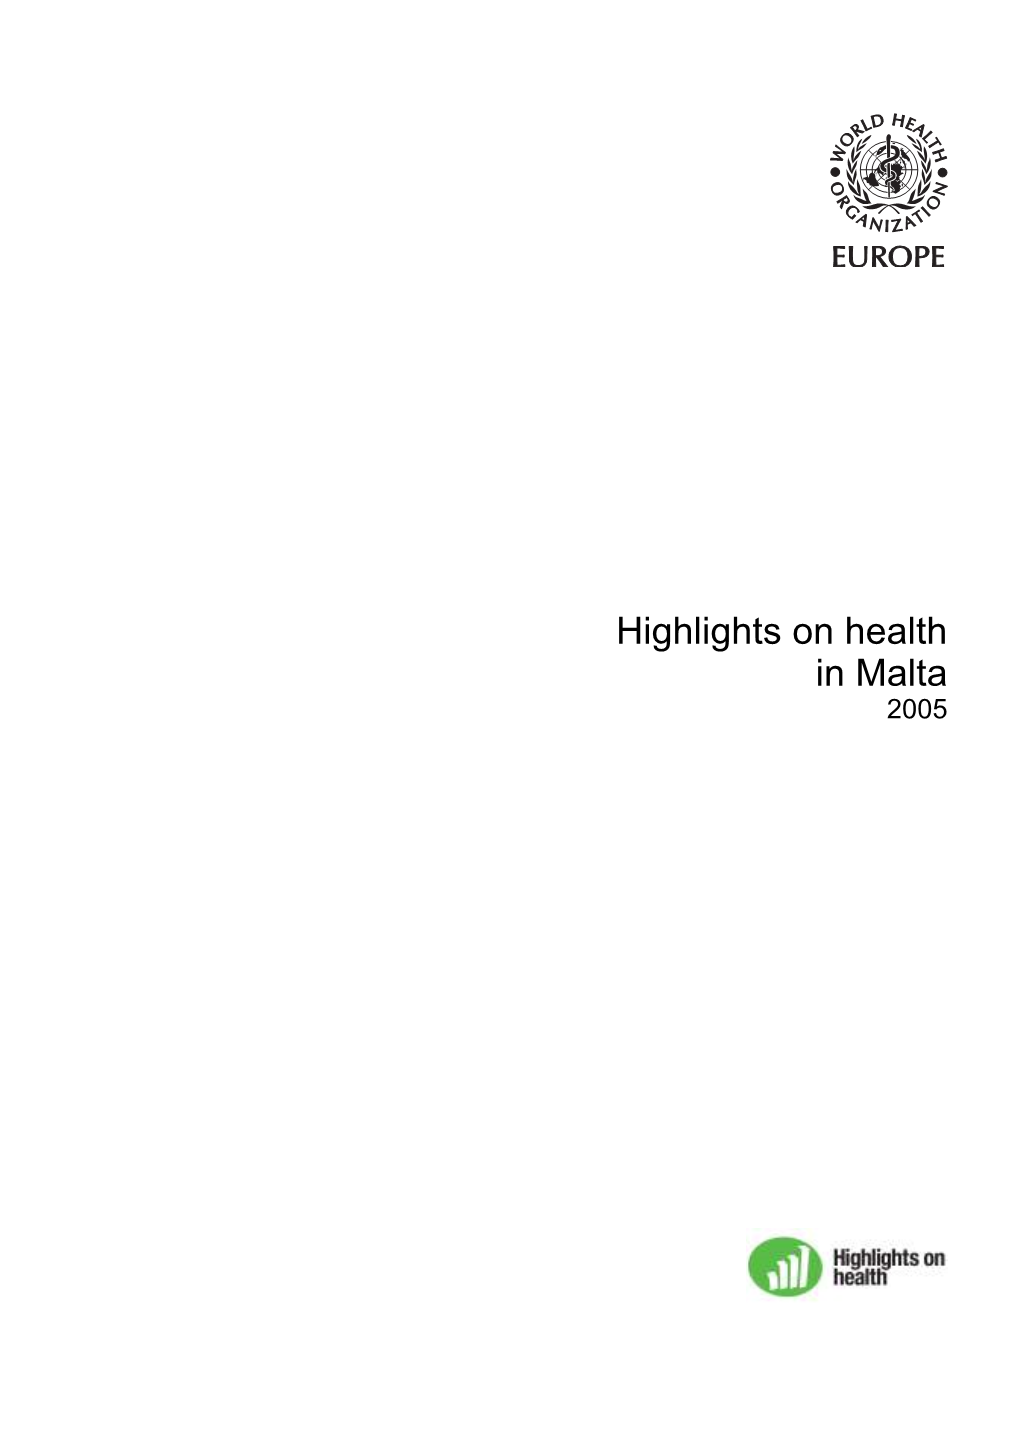 Highlights on Health in Malta 2005